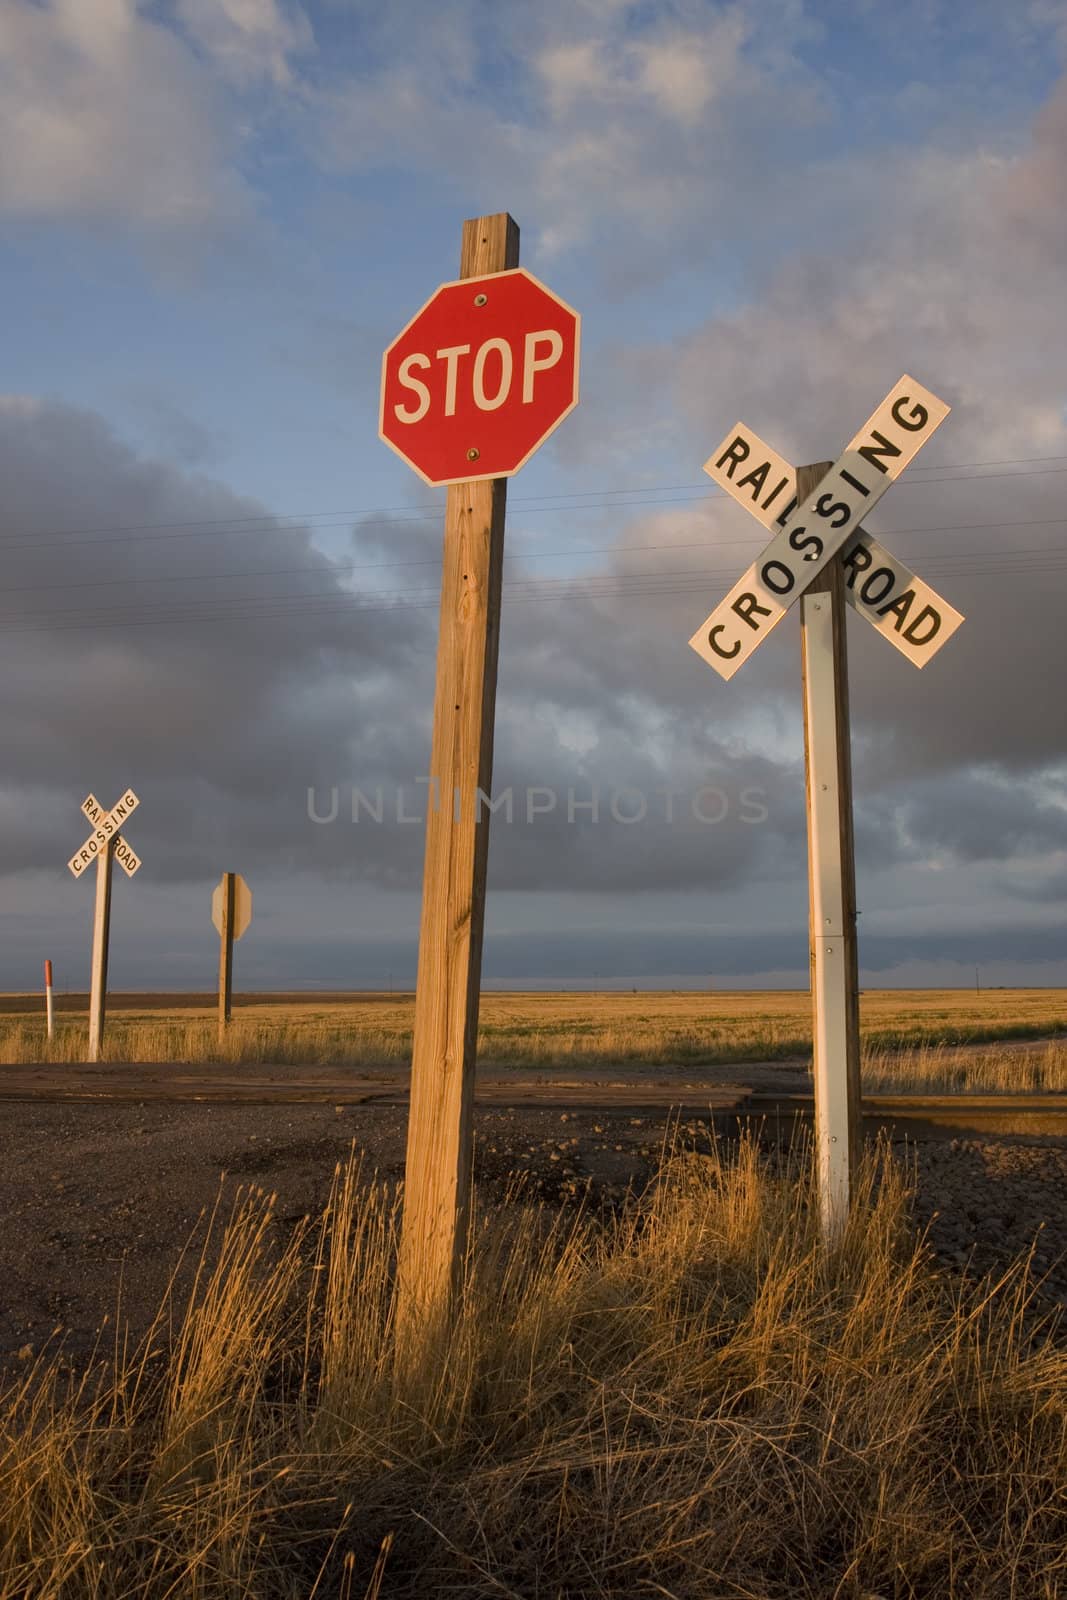 rural railroad crossing witrh a stop sign by PixelsAway